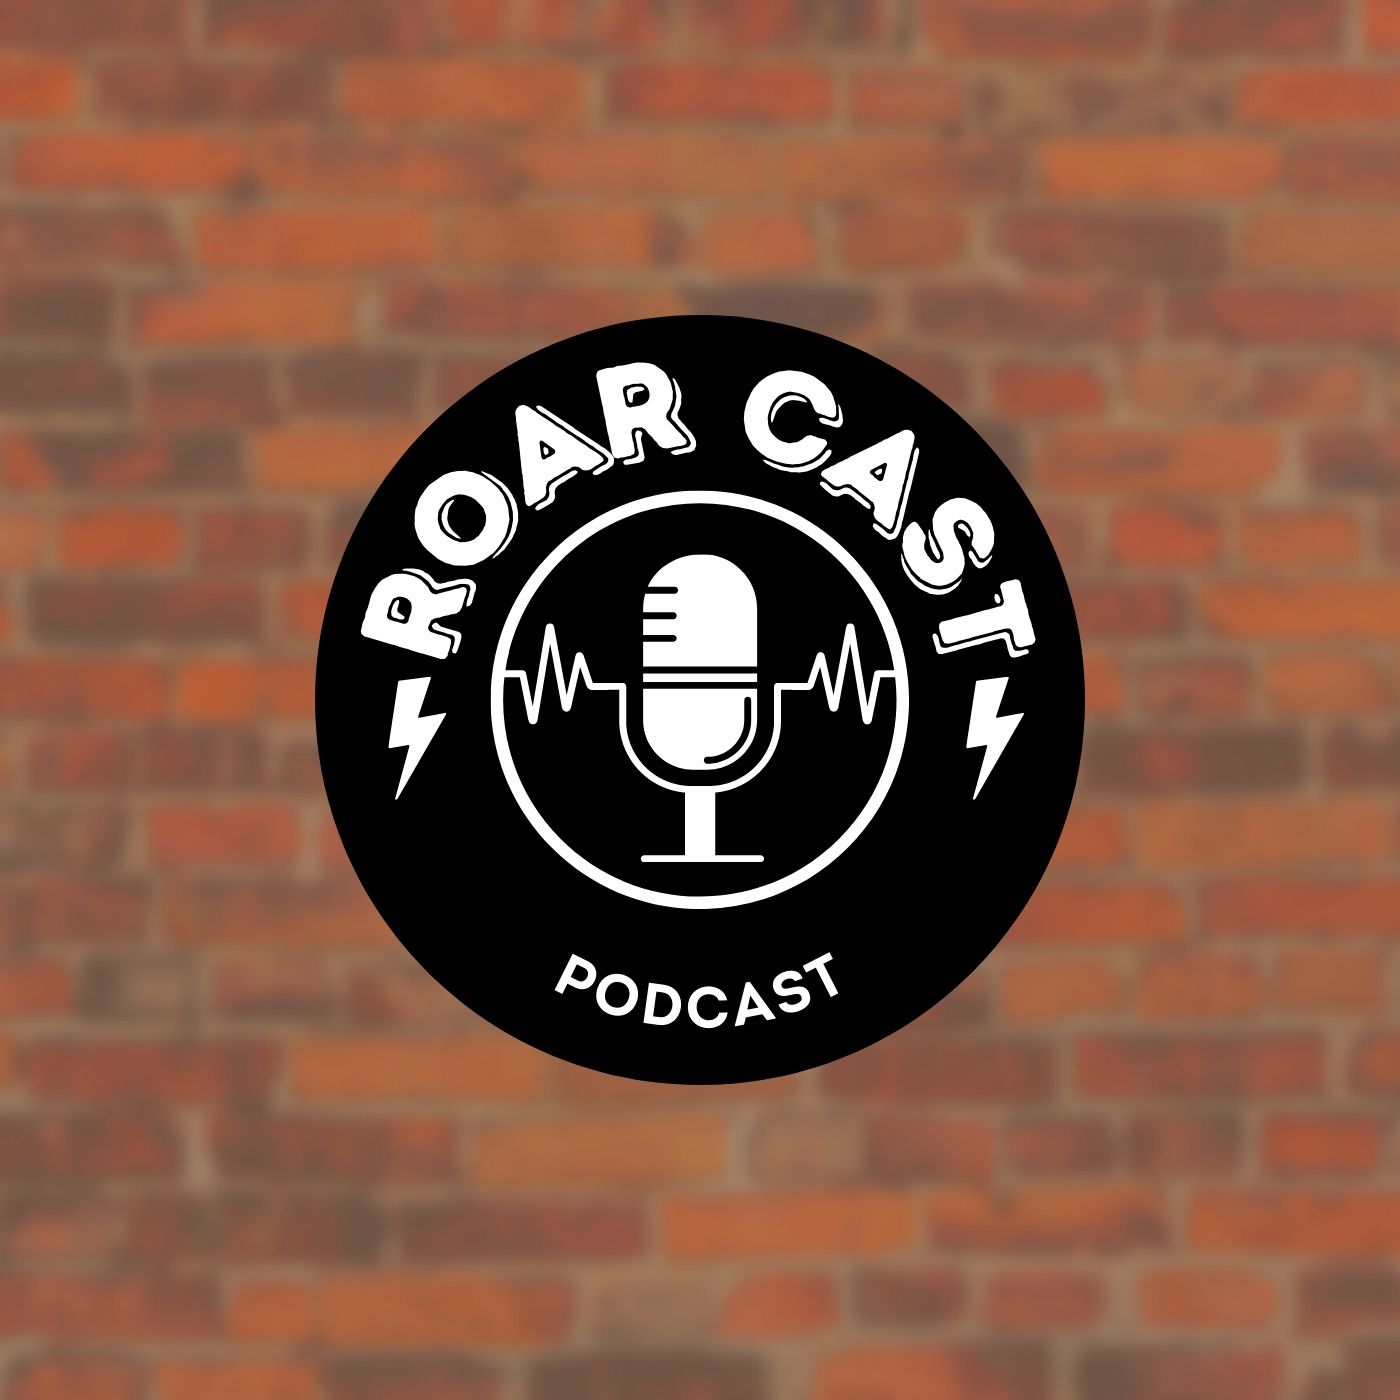 Roar Cast Podcast